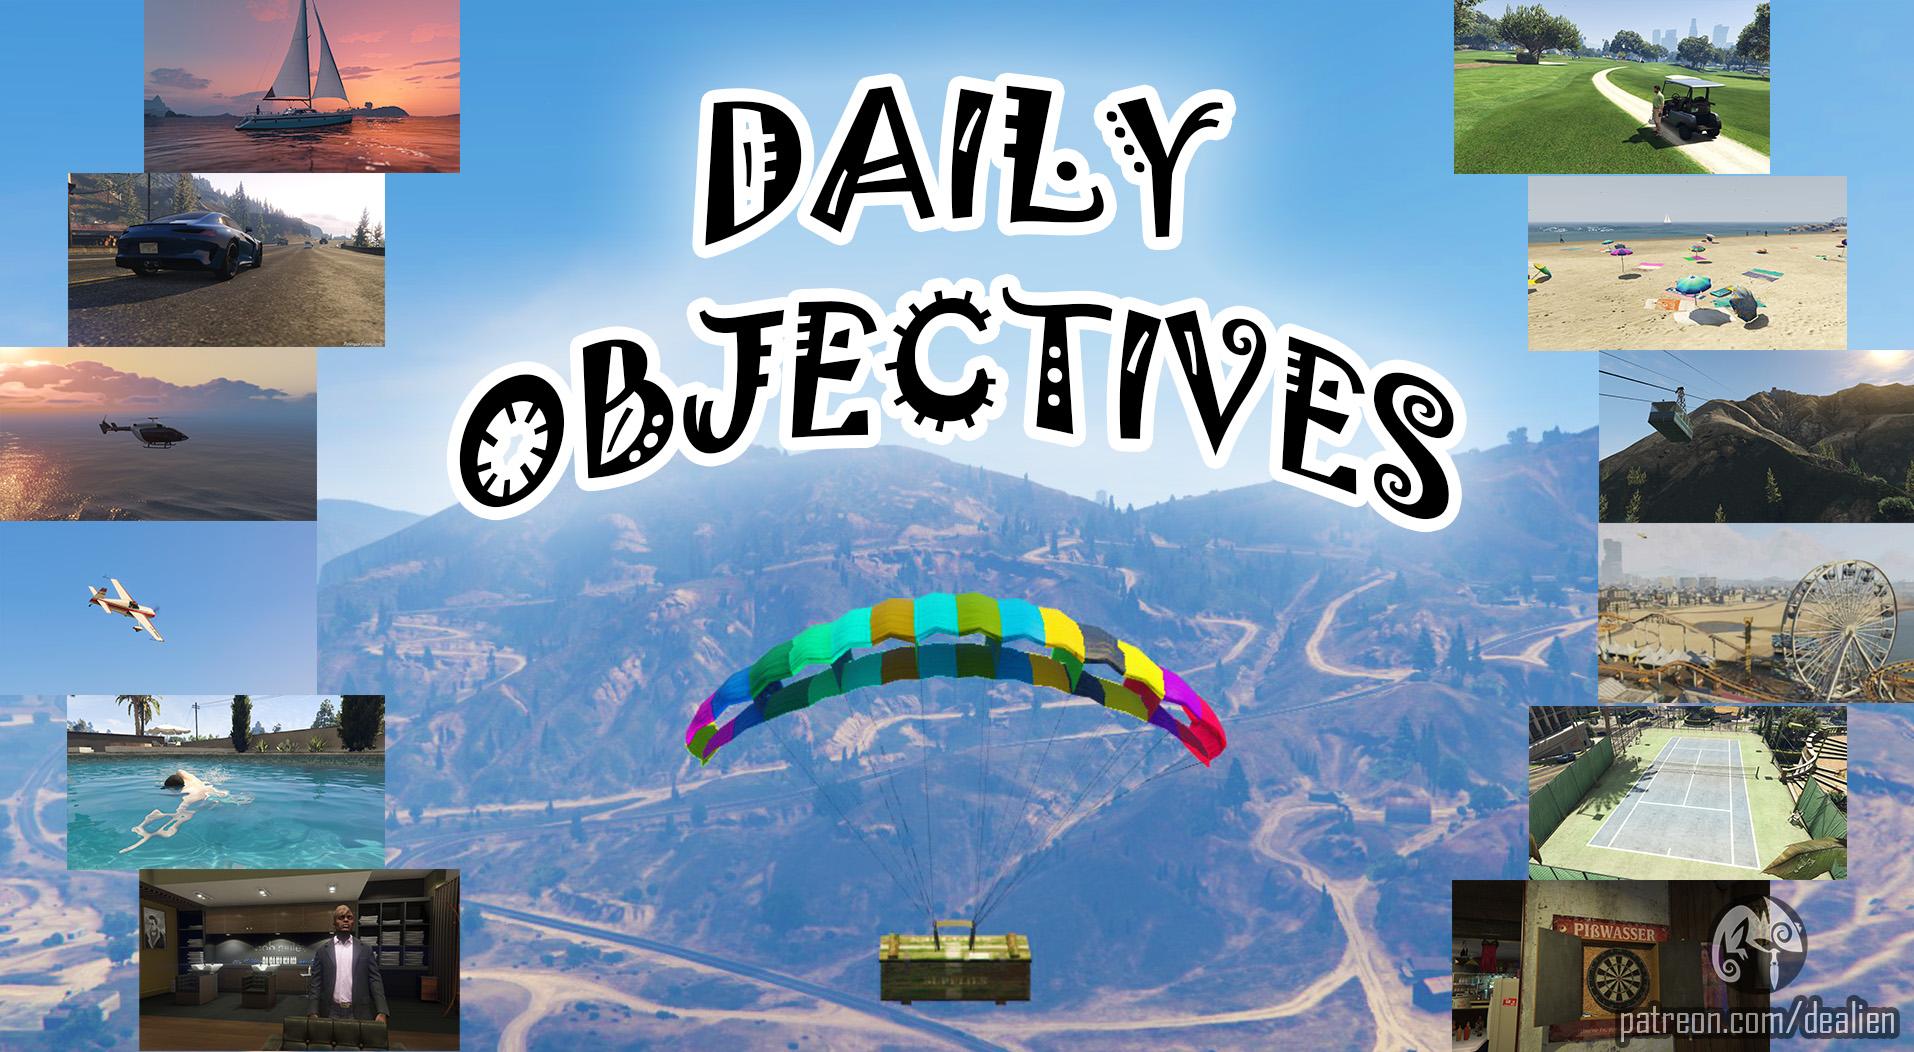 GTA 5 Online Update: Free Money bonus, Daily Objectives, Epic